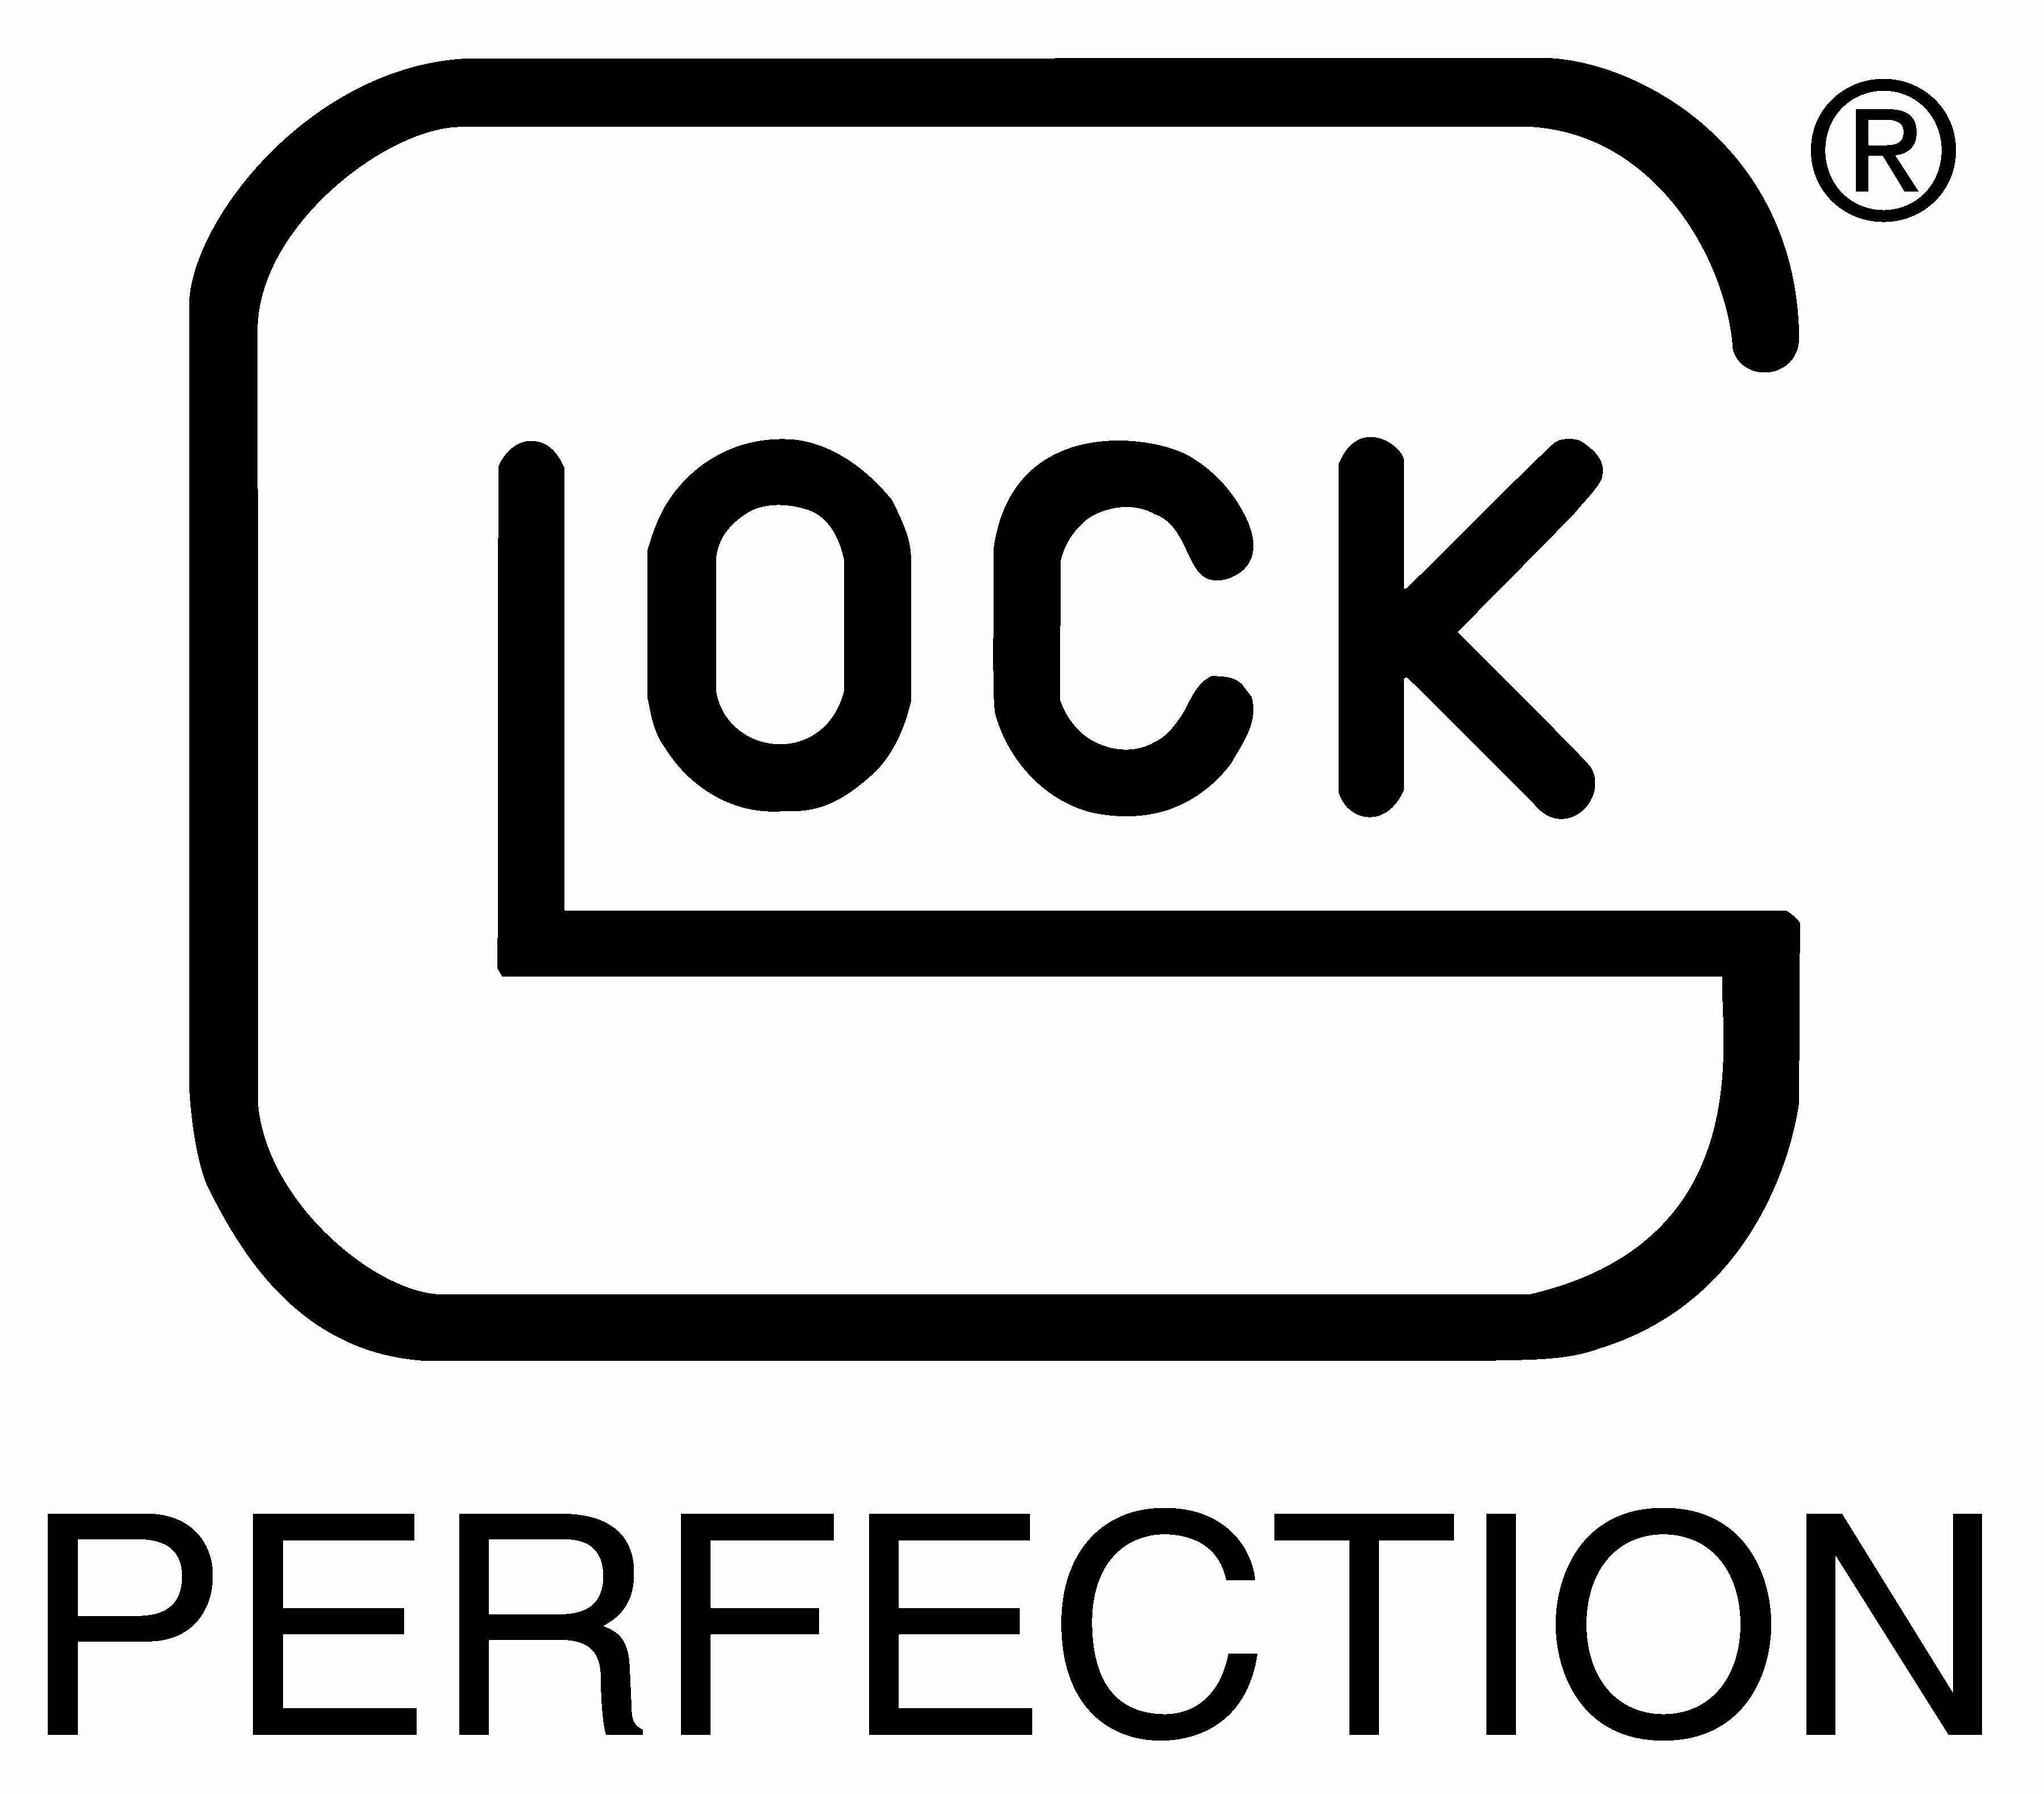 Glock Wallpaper Best Of Glock Logo Wallpaper 52dazhew Gallery